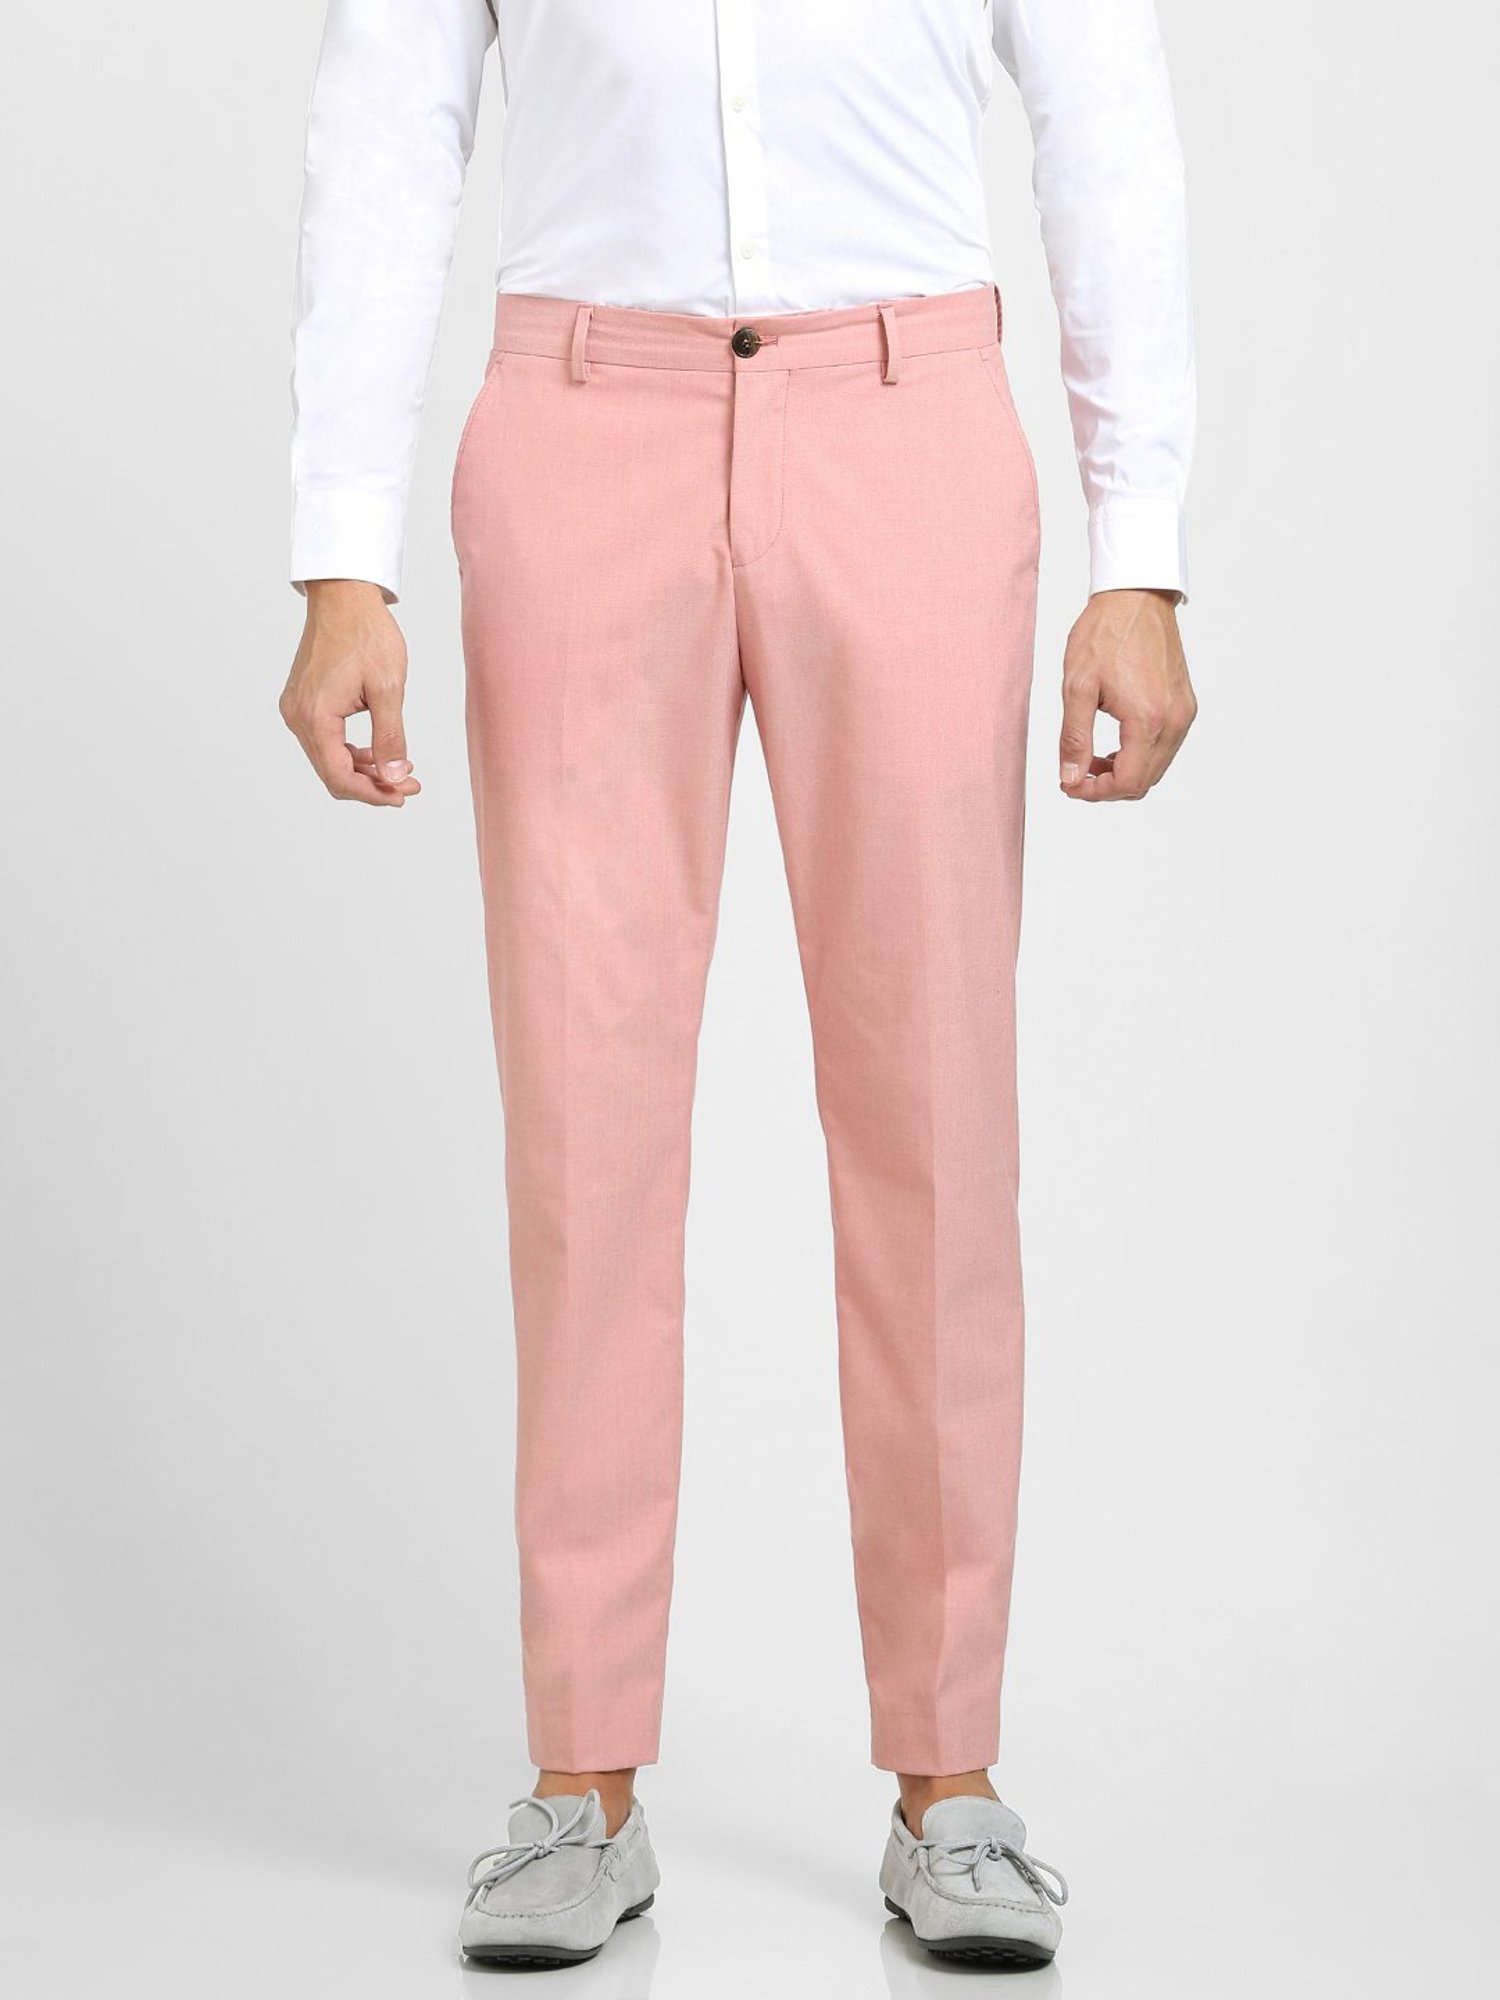 Buy PANIT Women's Regular Fit Cigarette Trousers (DSG117D-$P_Pink_26) at  Amazon.in